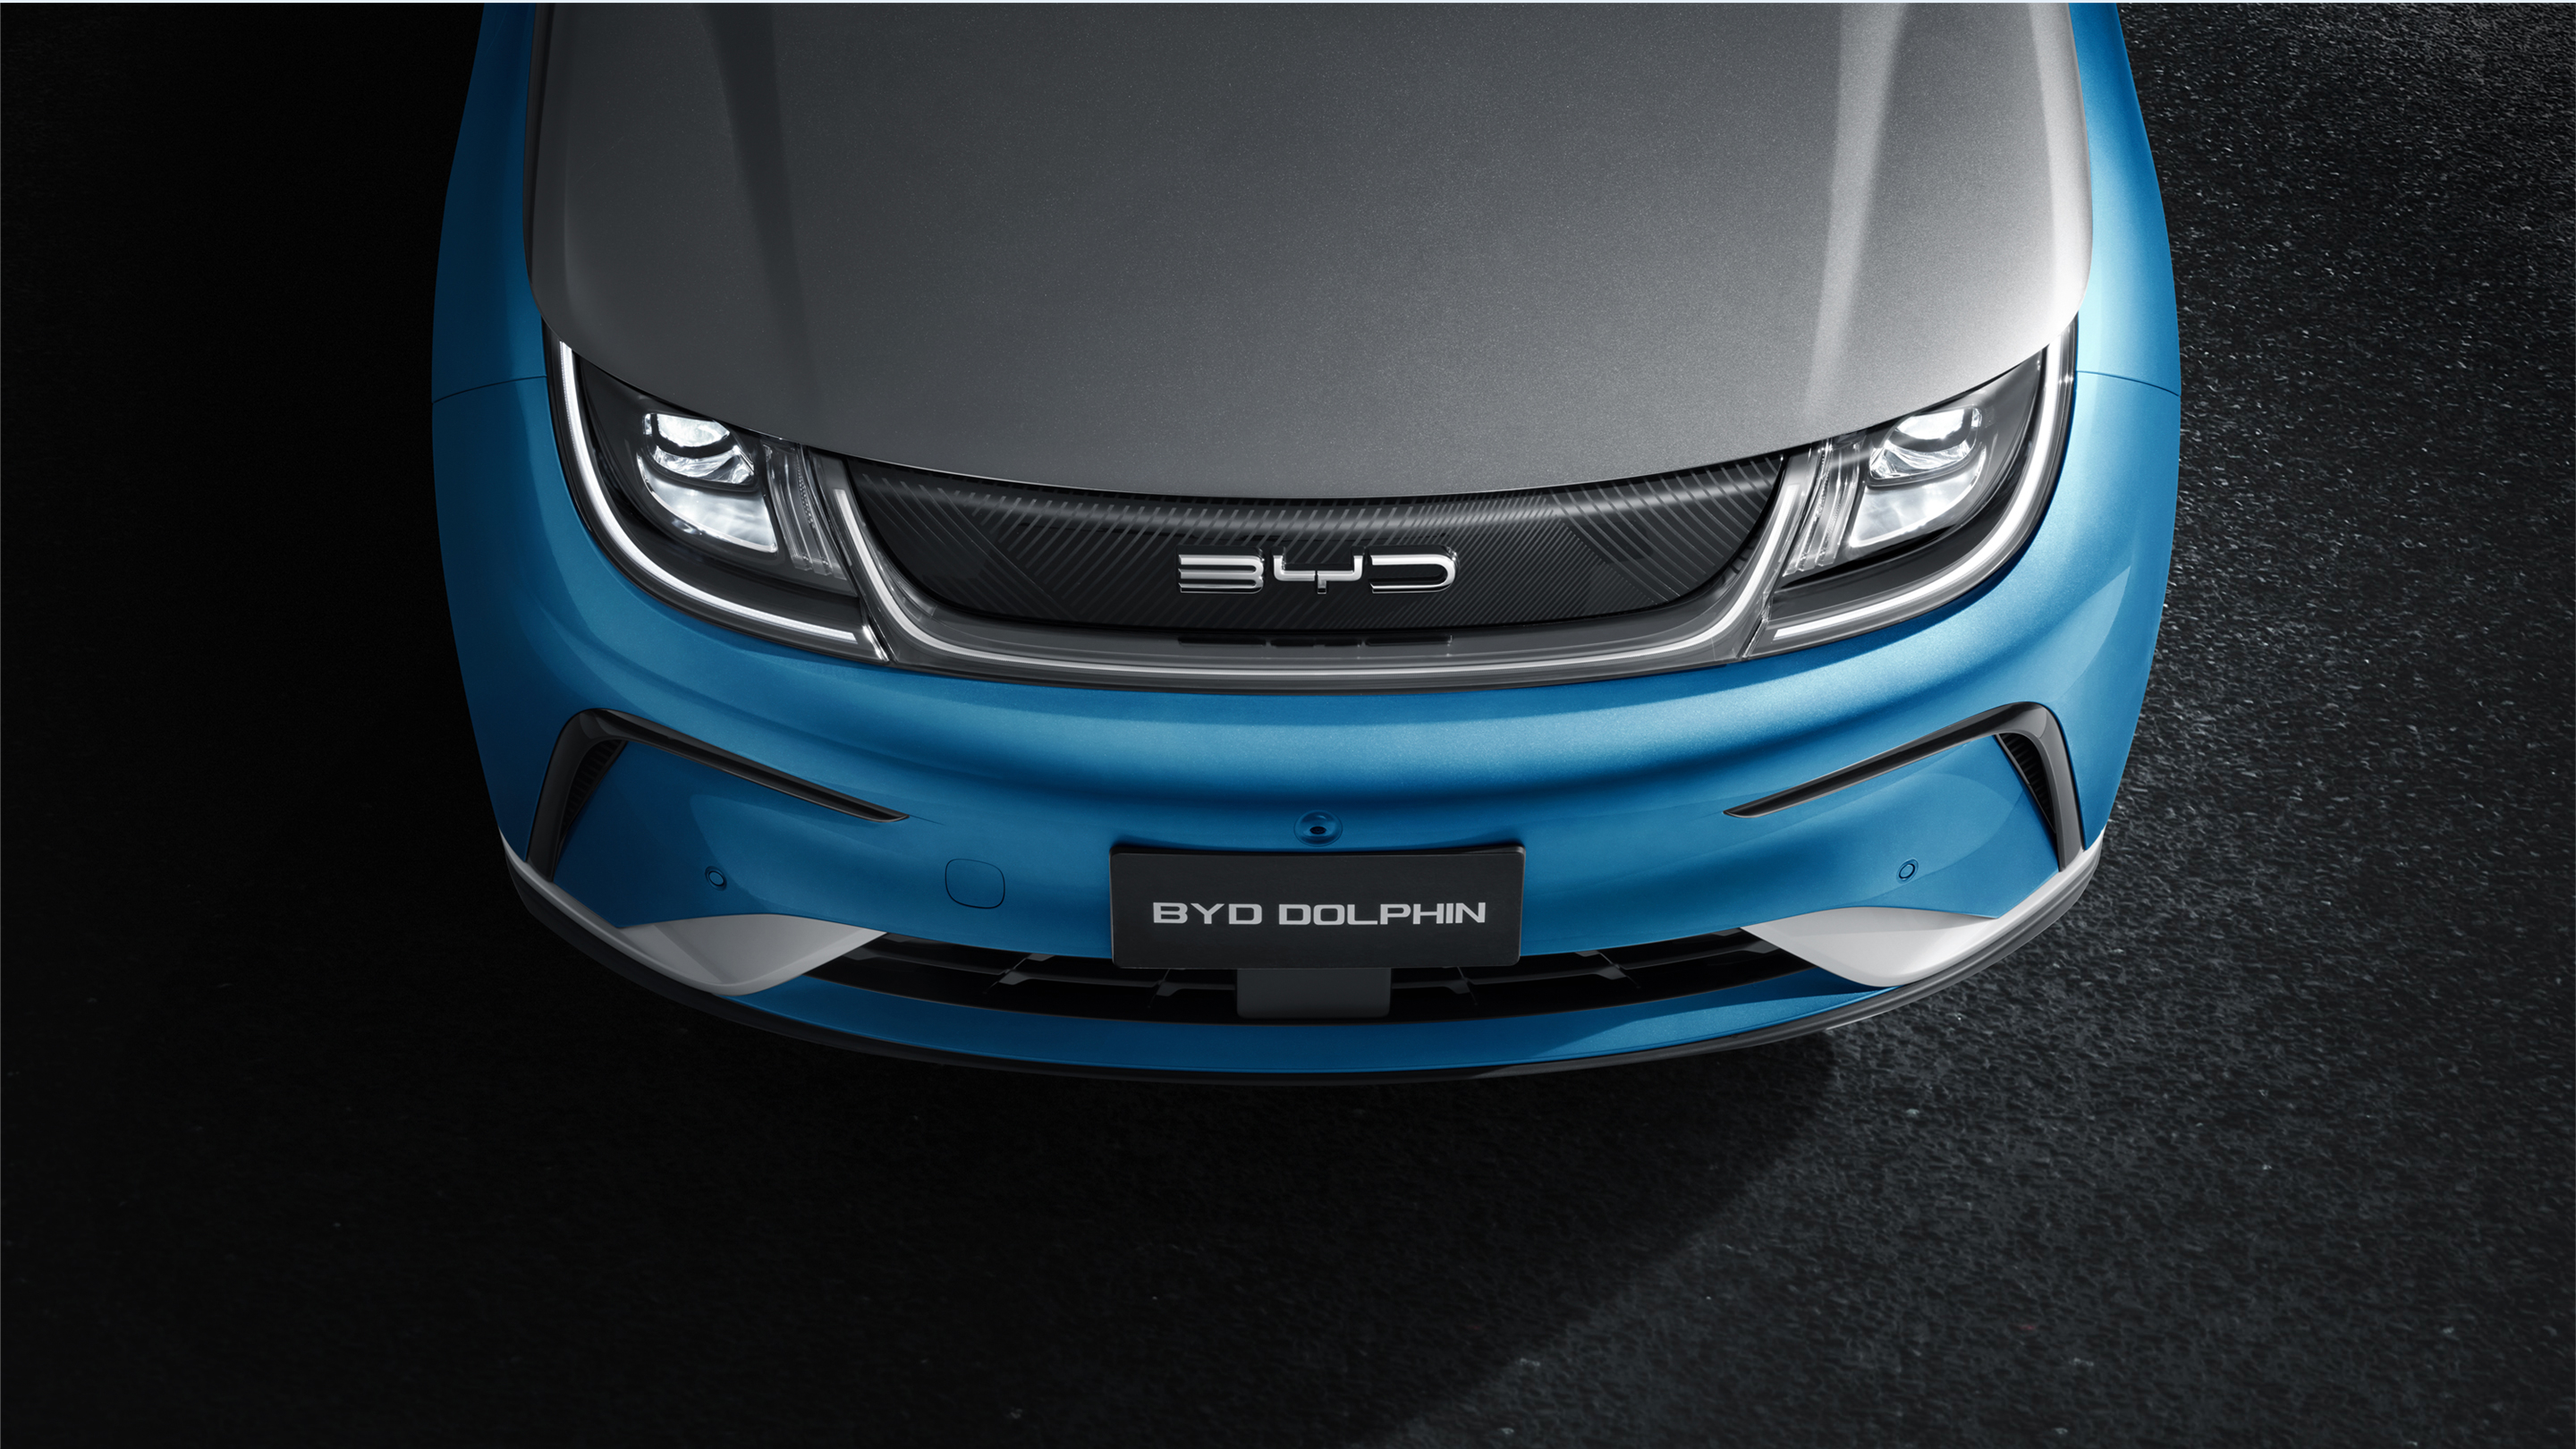 byd-dolphin-colour-picker-urban-grey-1005x608 - Paul Tan's Automotive News